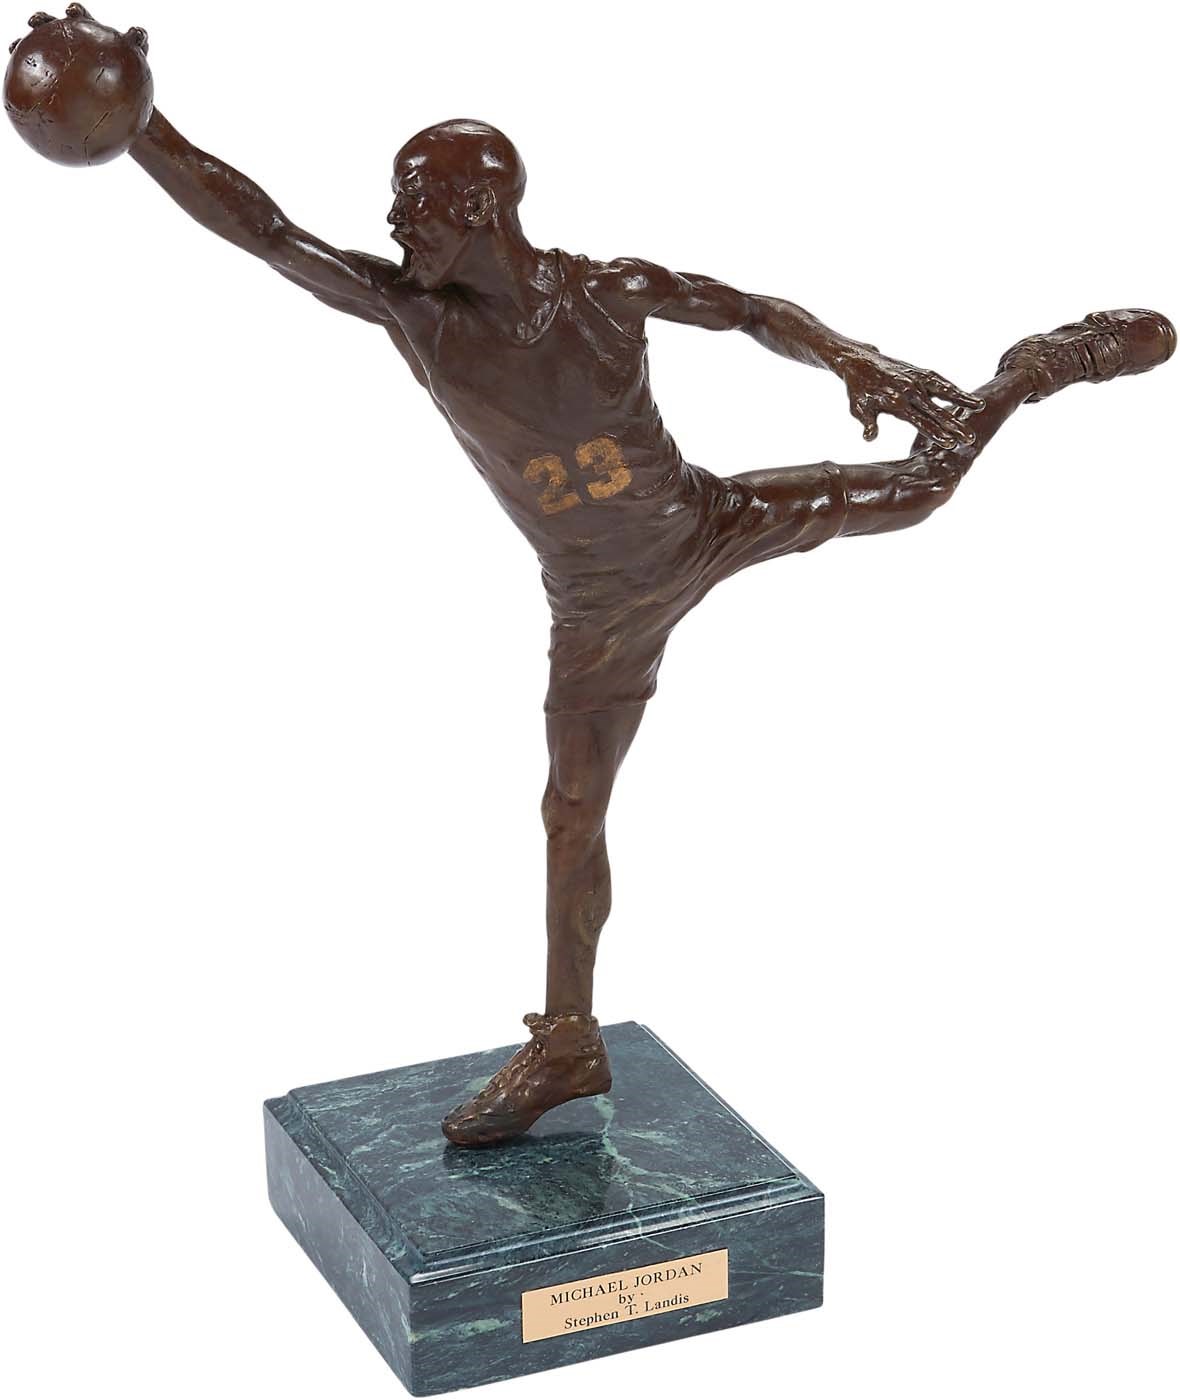 - 1993 Michael Jordan "1 of 1" Artist Proof Bronze by Steve Landis (Only one Produced by Landis)